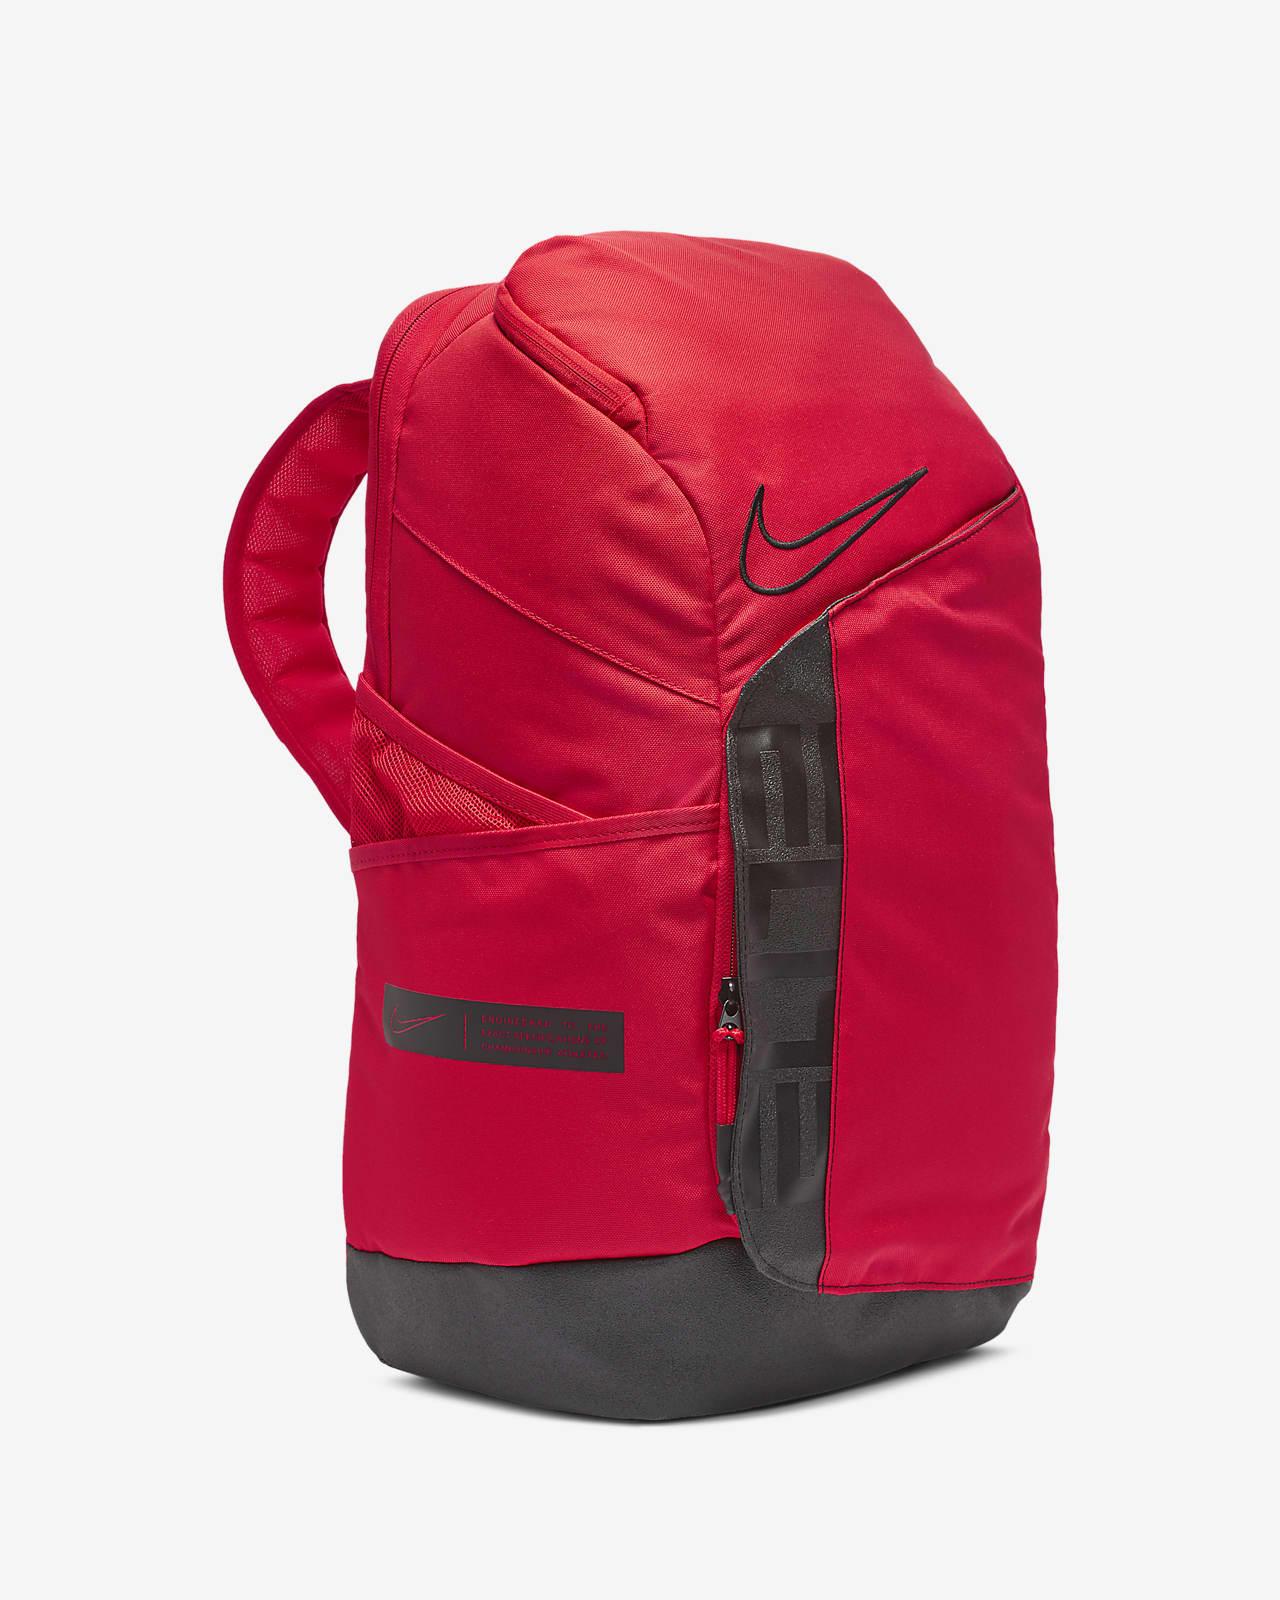 nike elite pro backpack sale